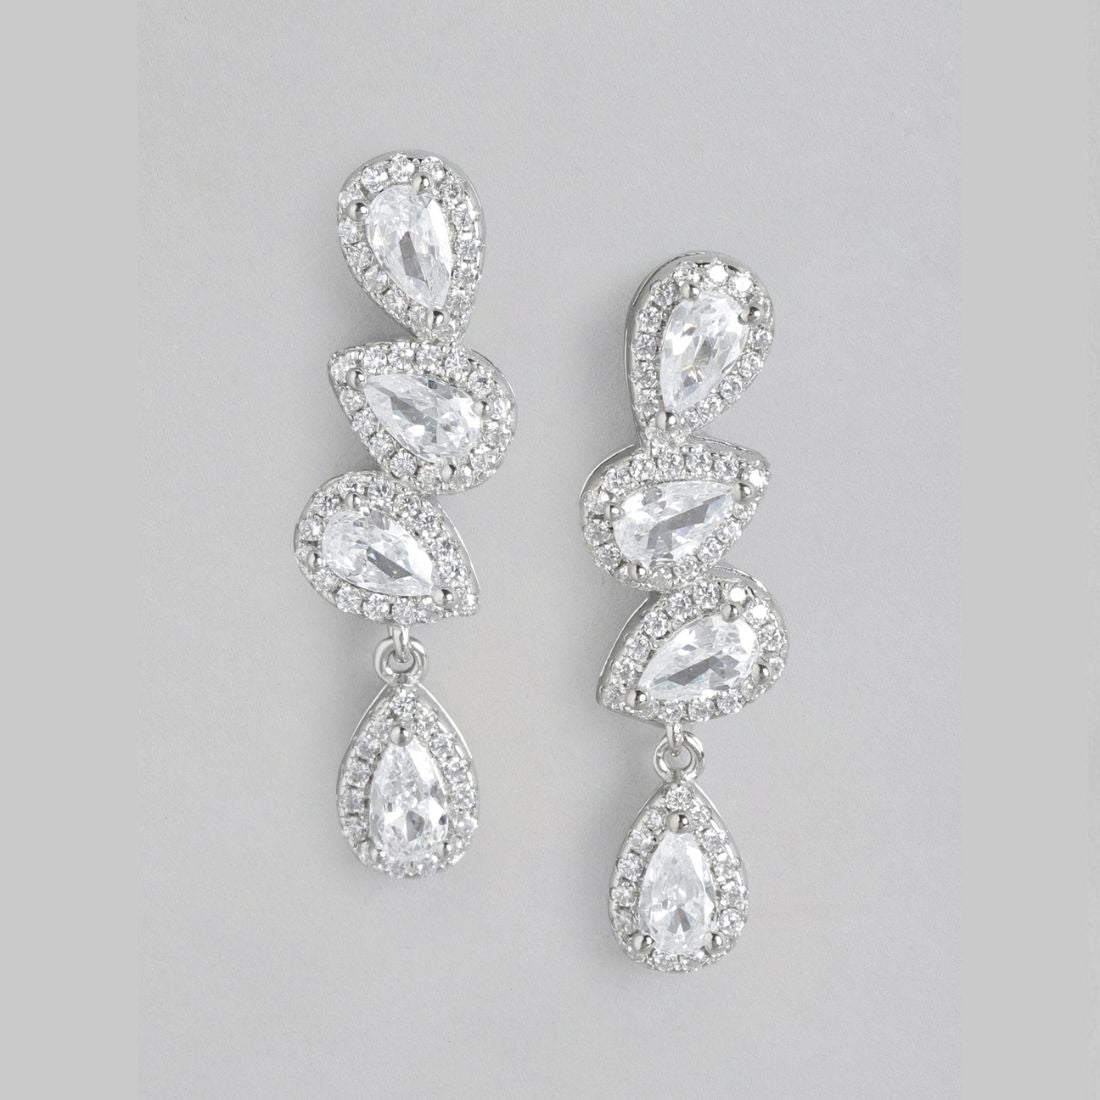 Dazzling Teardrop Radiance Rhodium-Plated 925 Sterling Silver Earrings